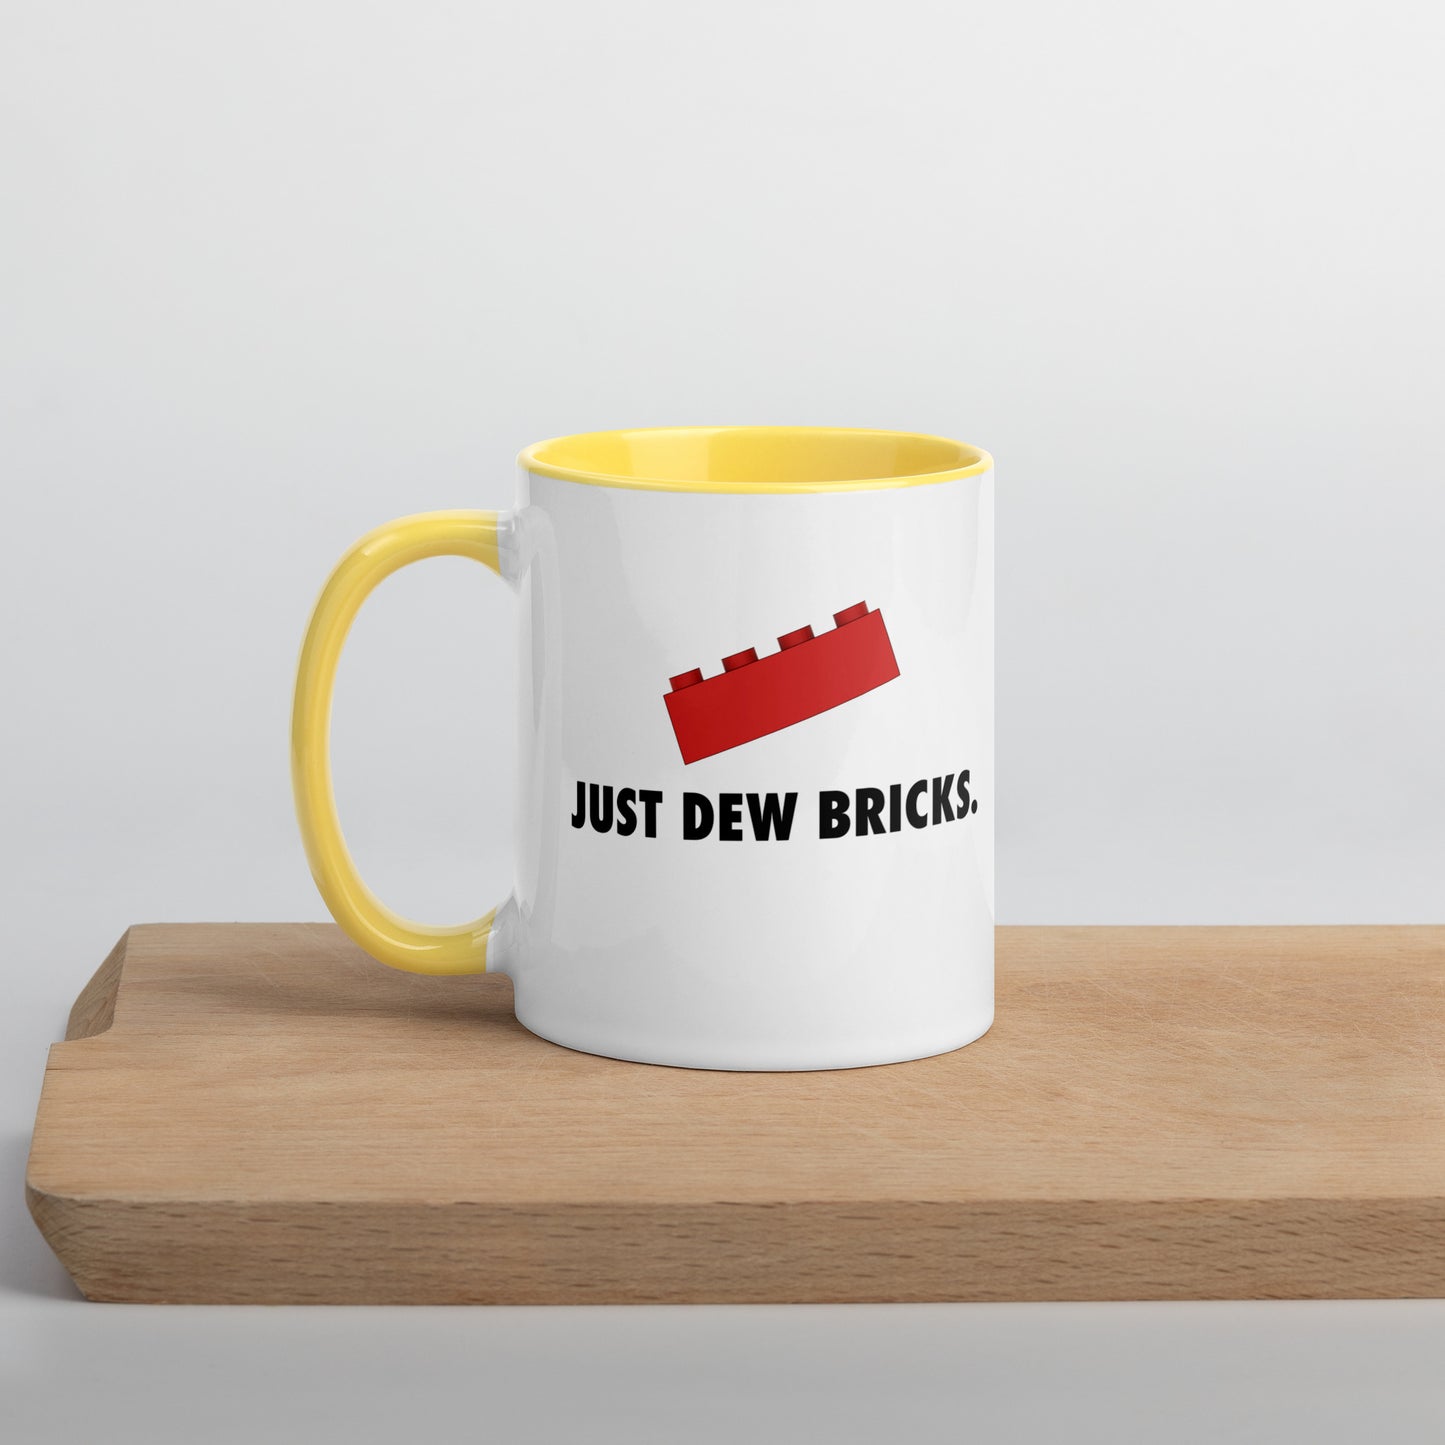 Dew Bricks Mug with Color Inside